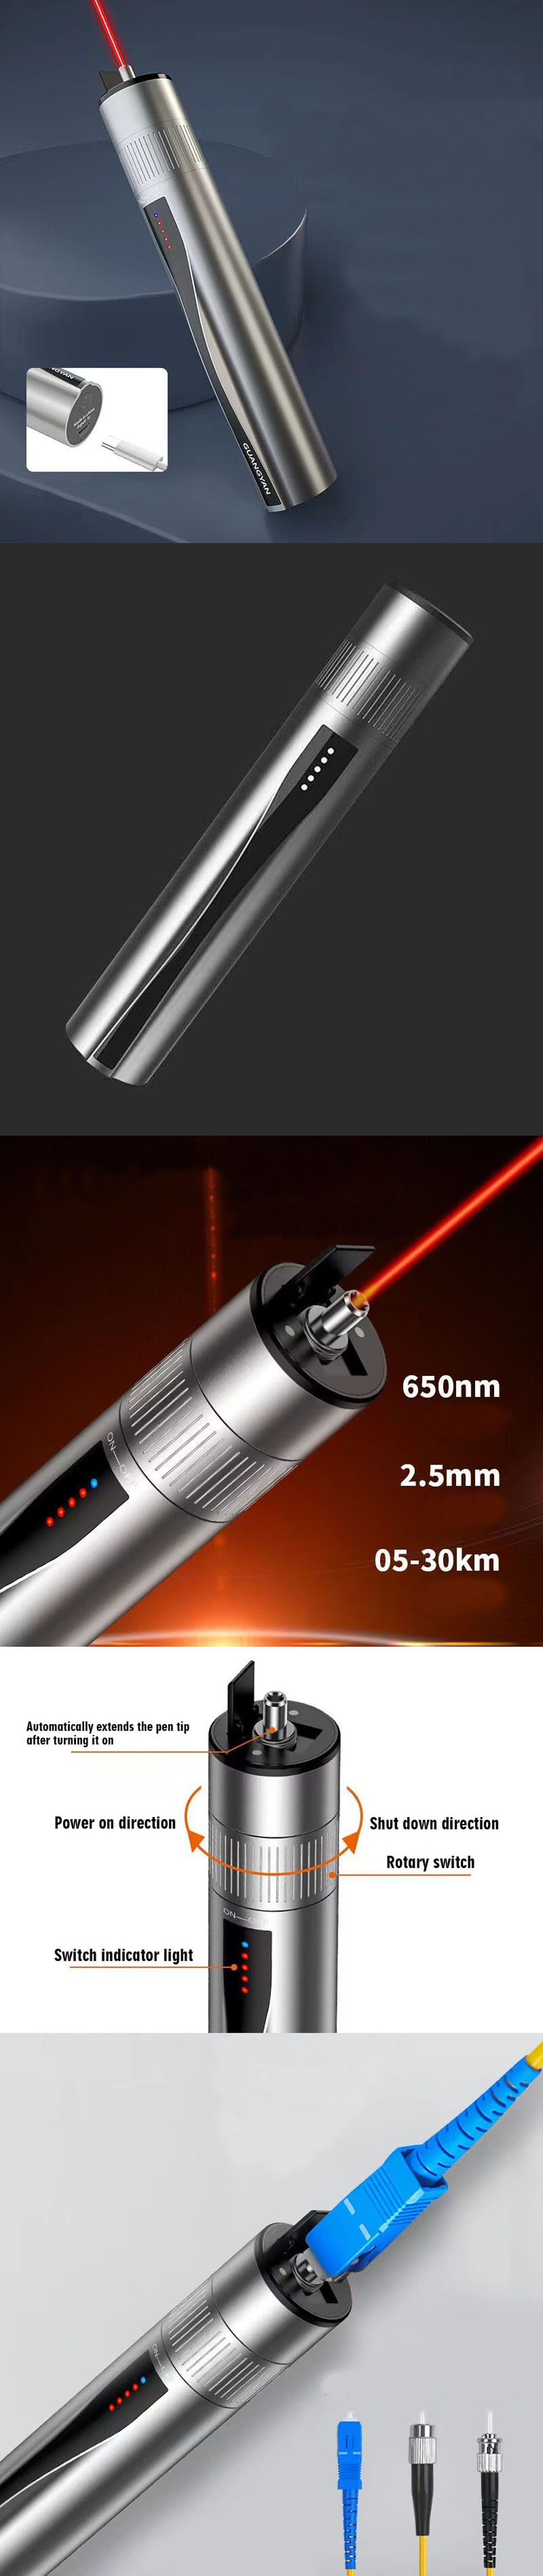 tester laser a fibra ottica